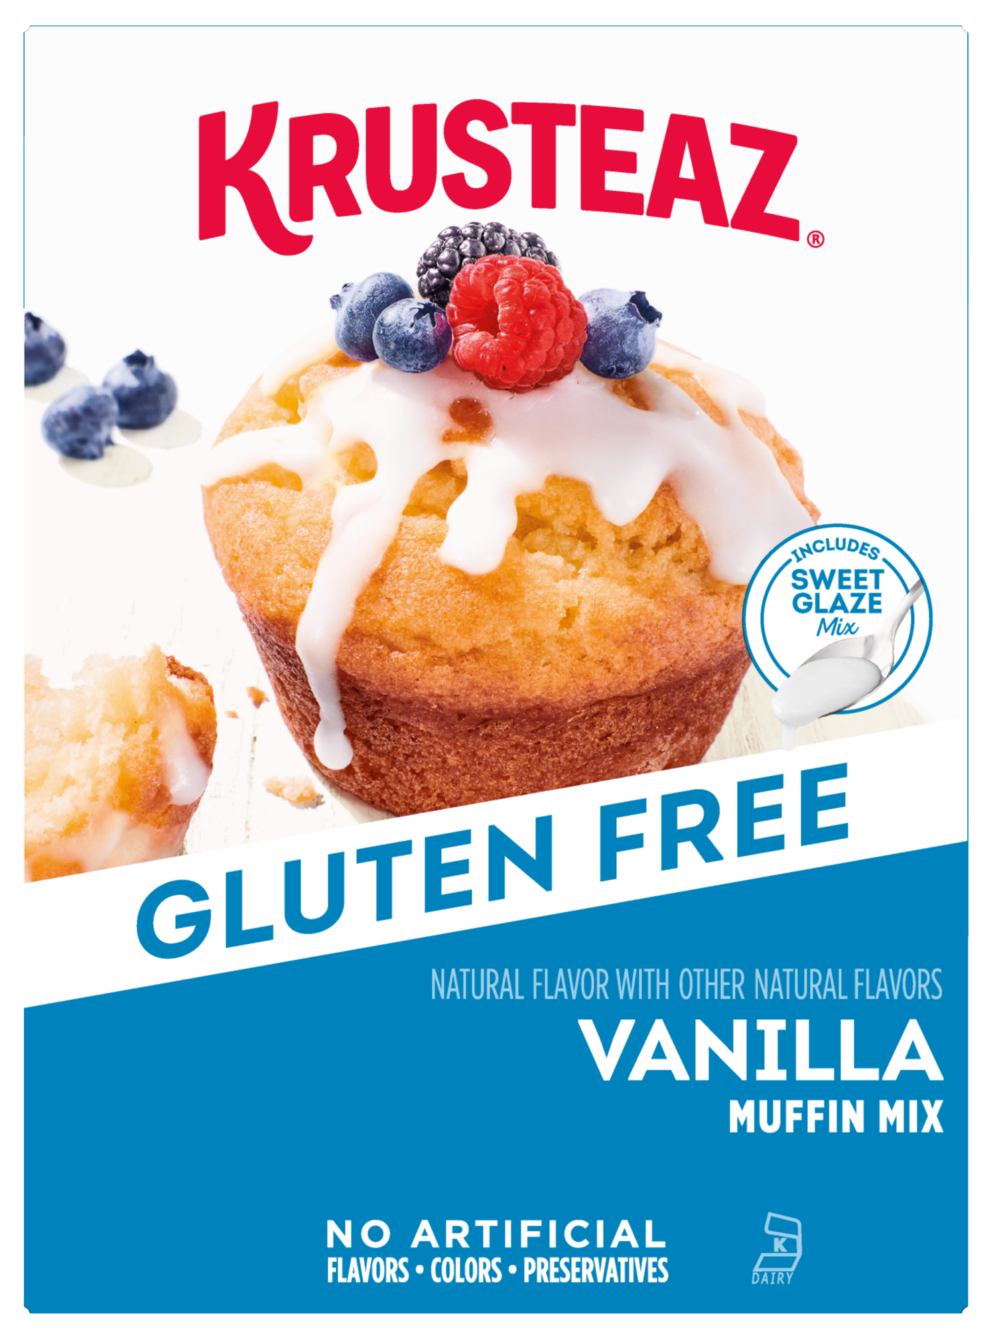 Box of Krusteaz Gluten Free Vanilla Muffin Mix.